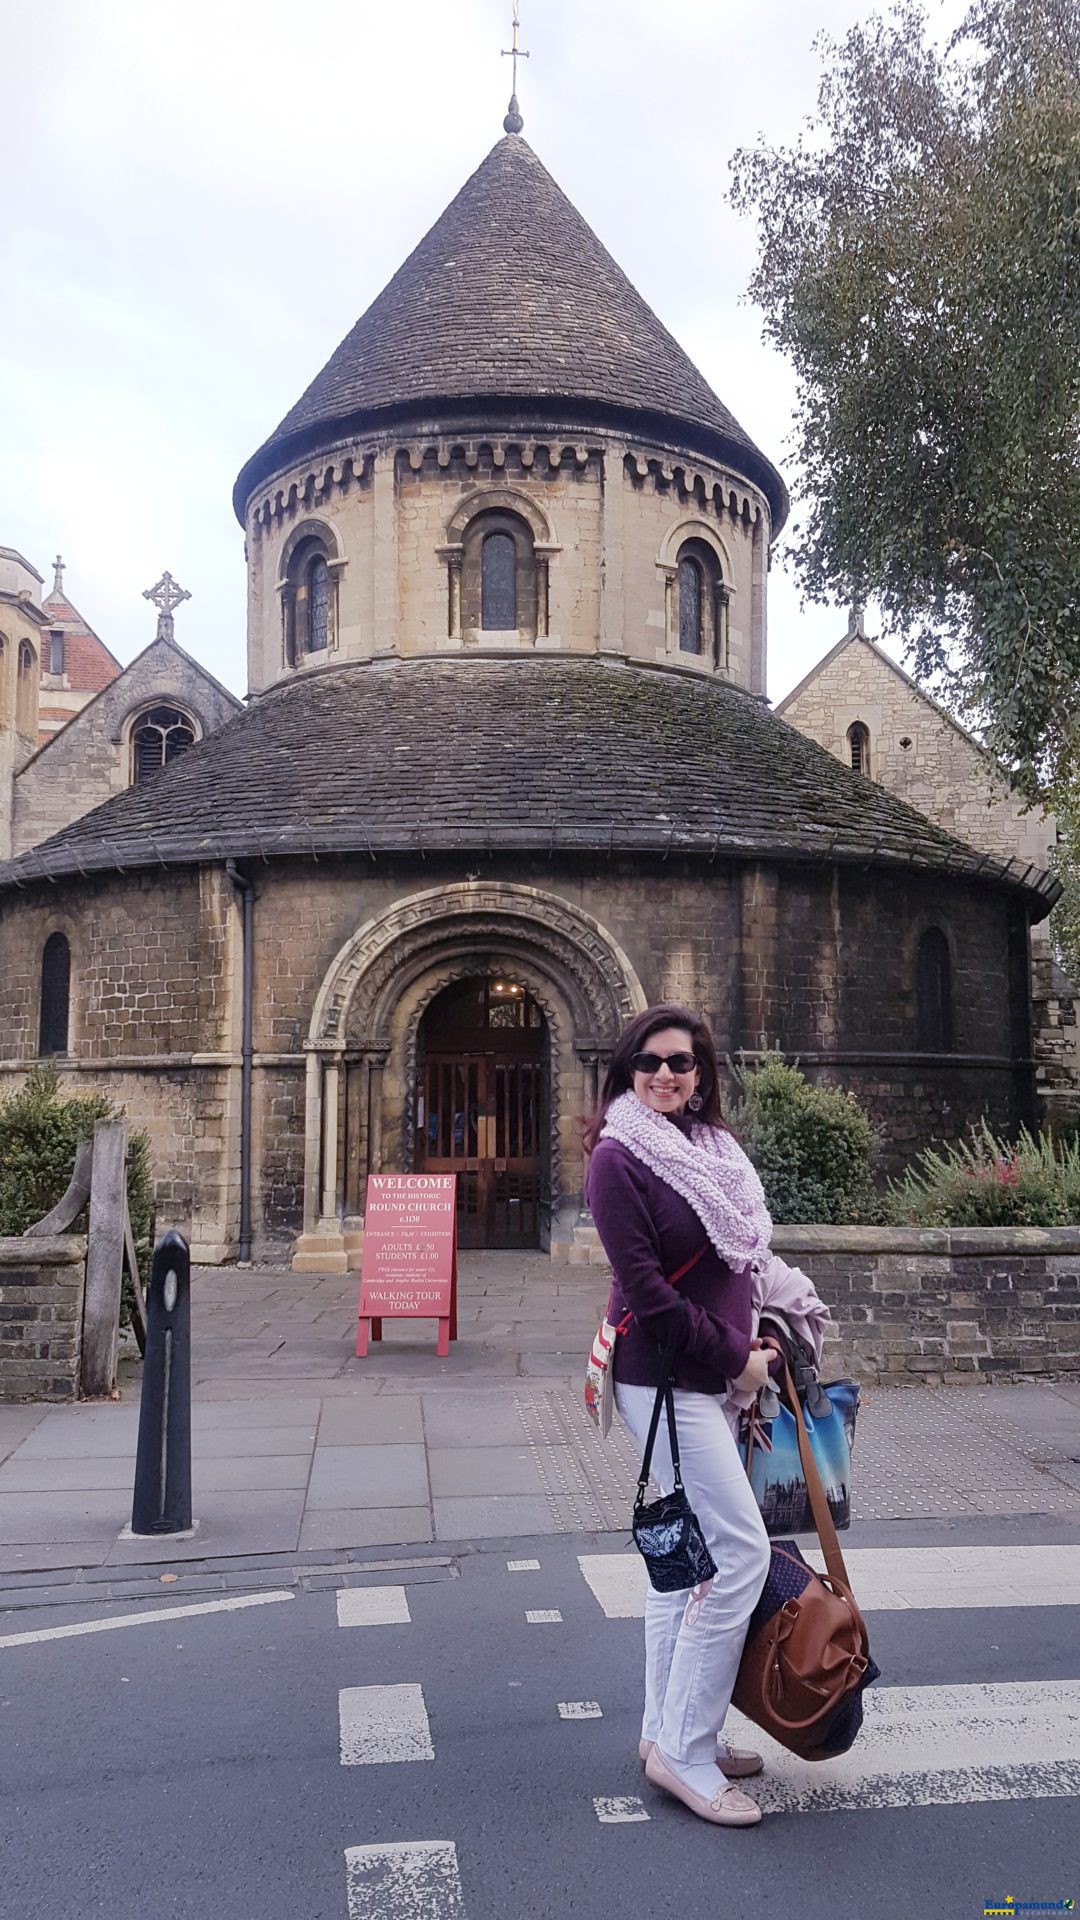 Round Church , Cambridge